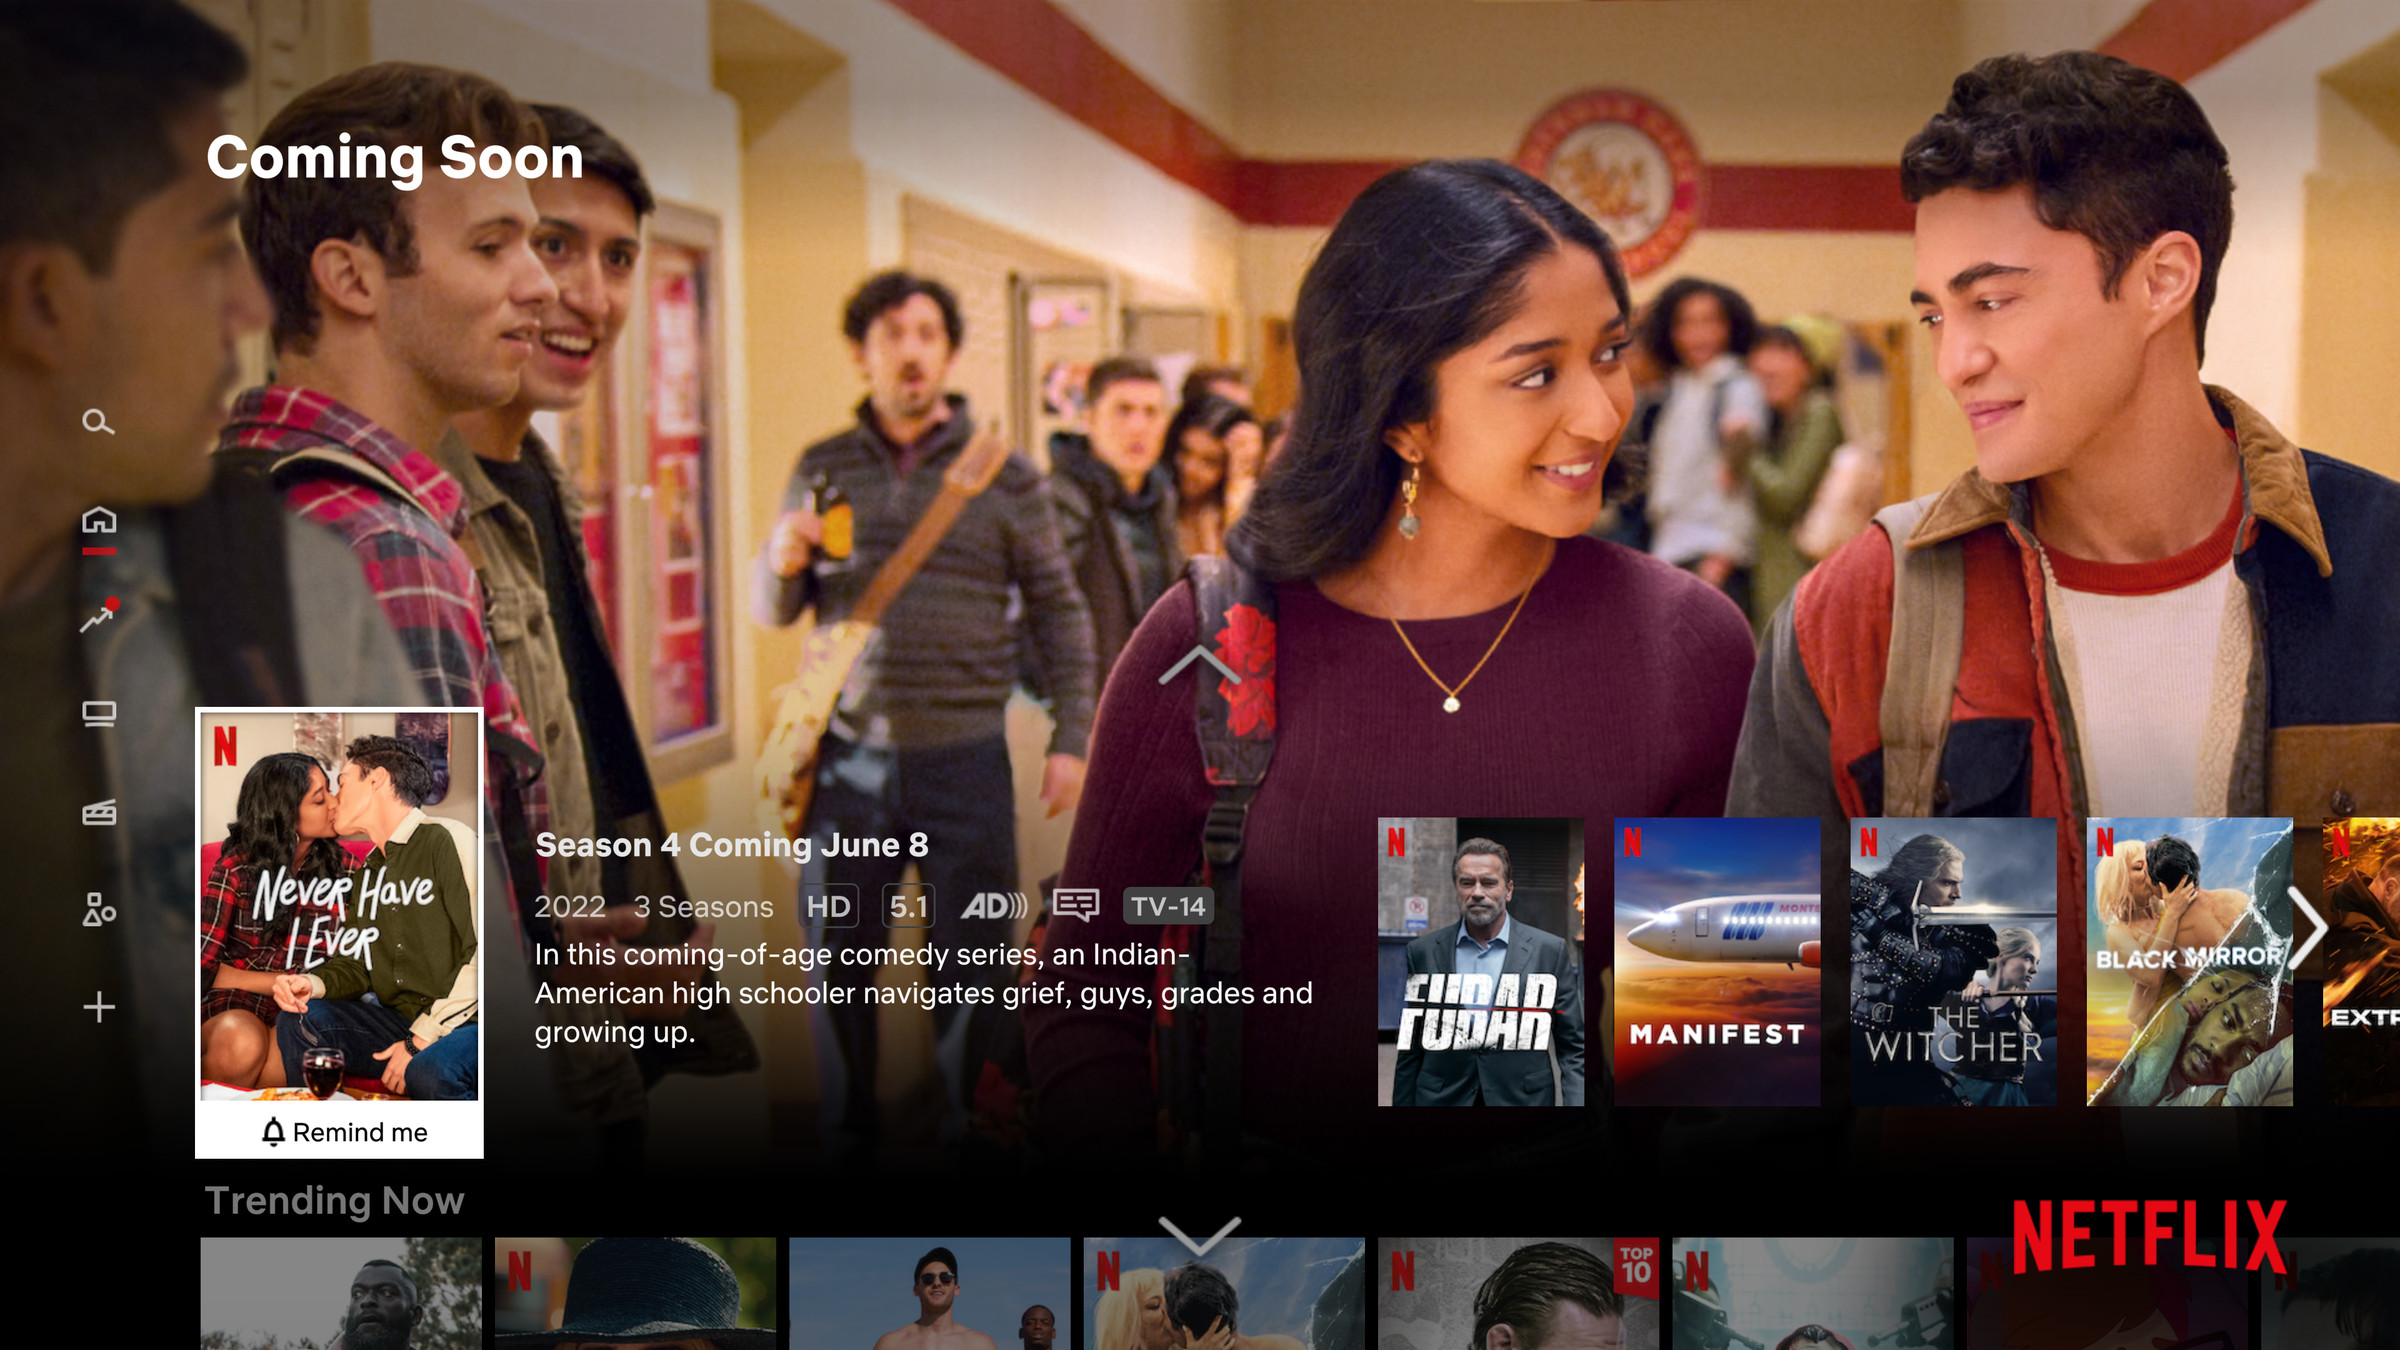 A screenshot of Netflix’s “Coming Soon” row on its TV app.